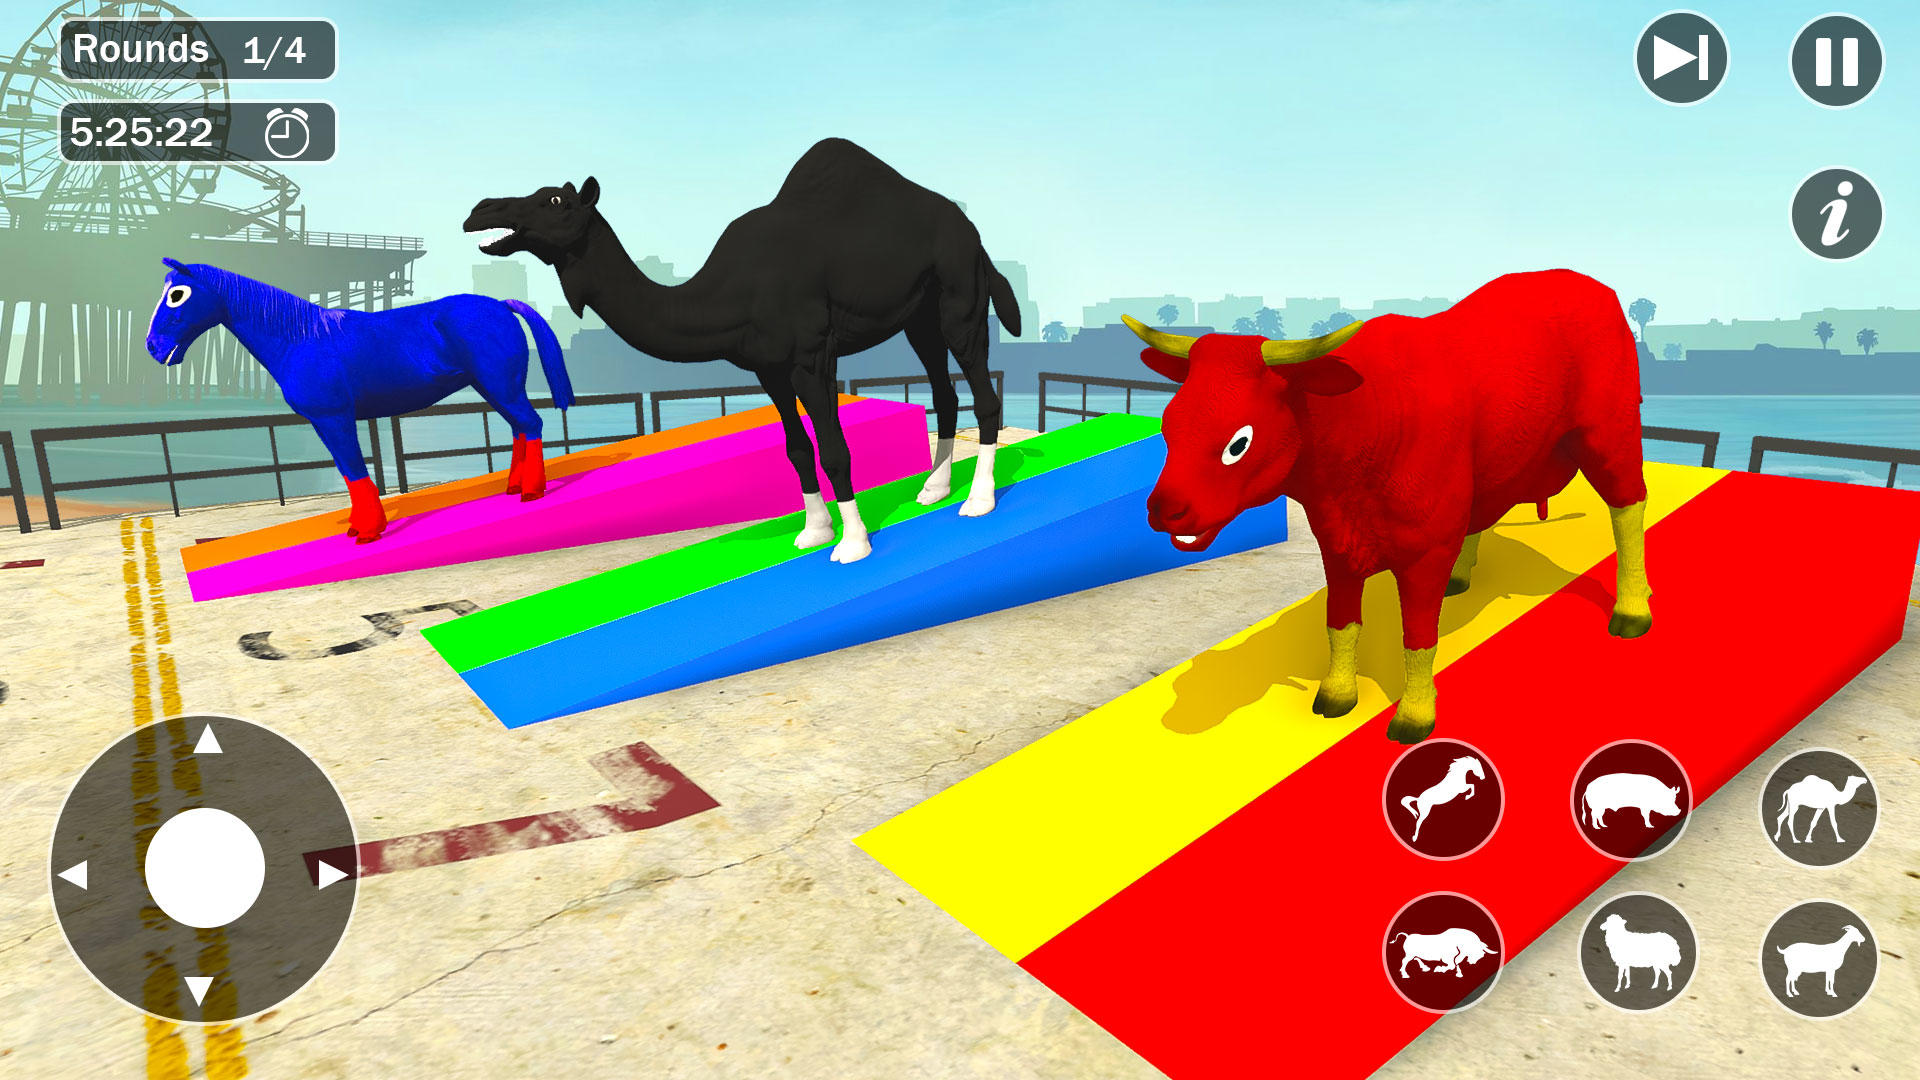 Screenshot 1 of GT Animal 3D: sfida di corse 15.0